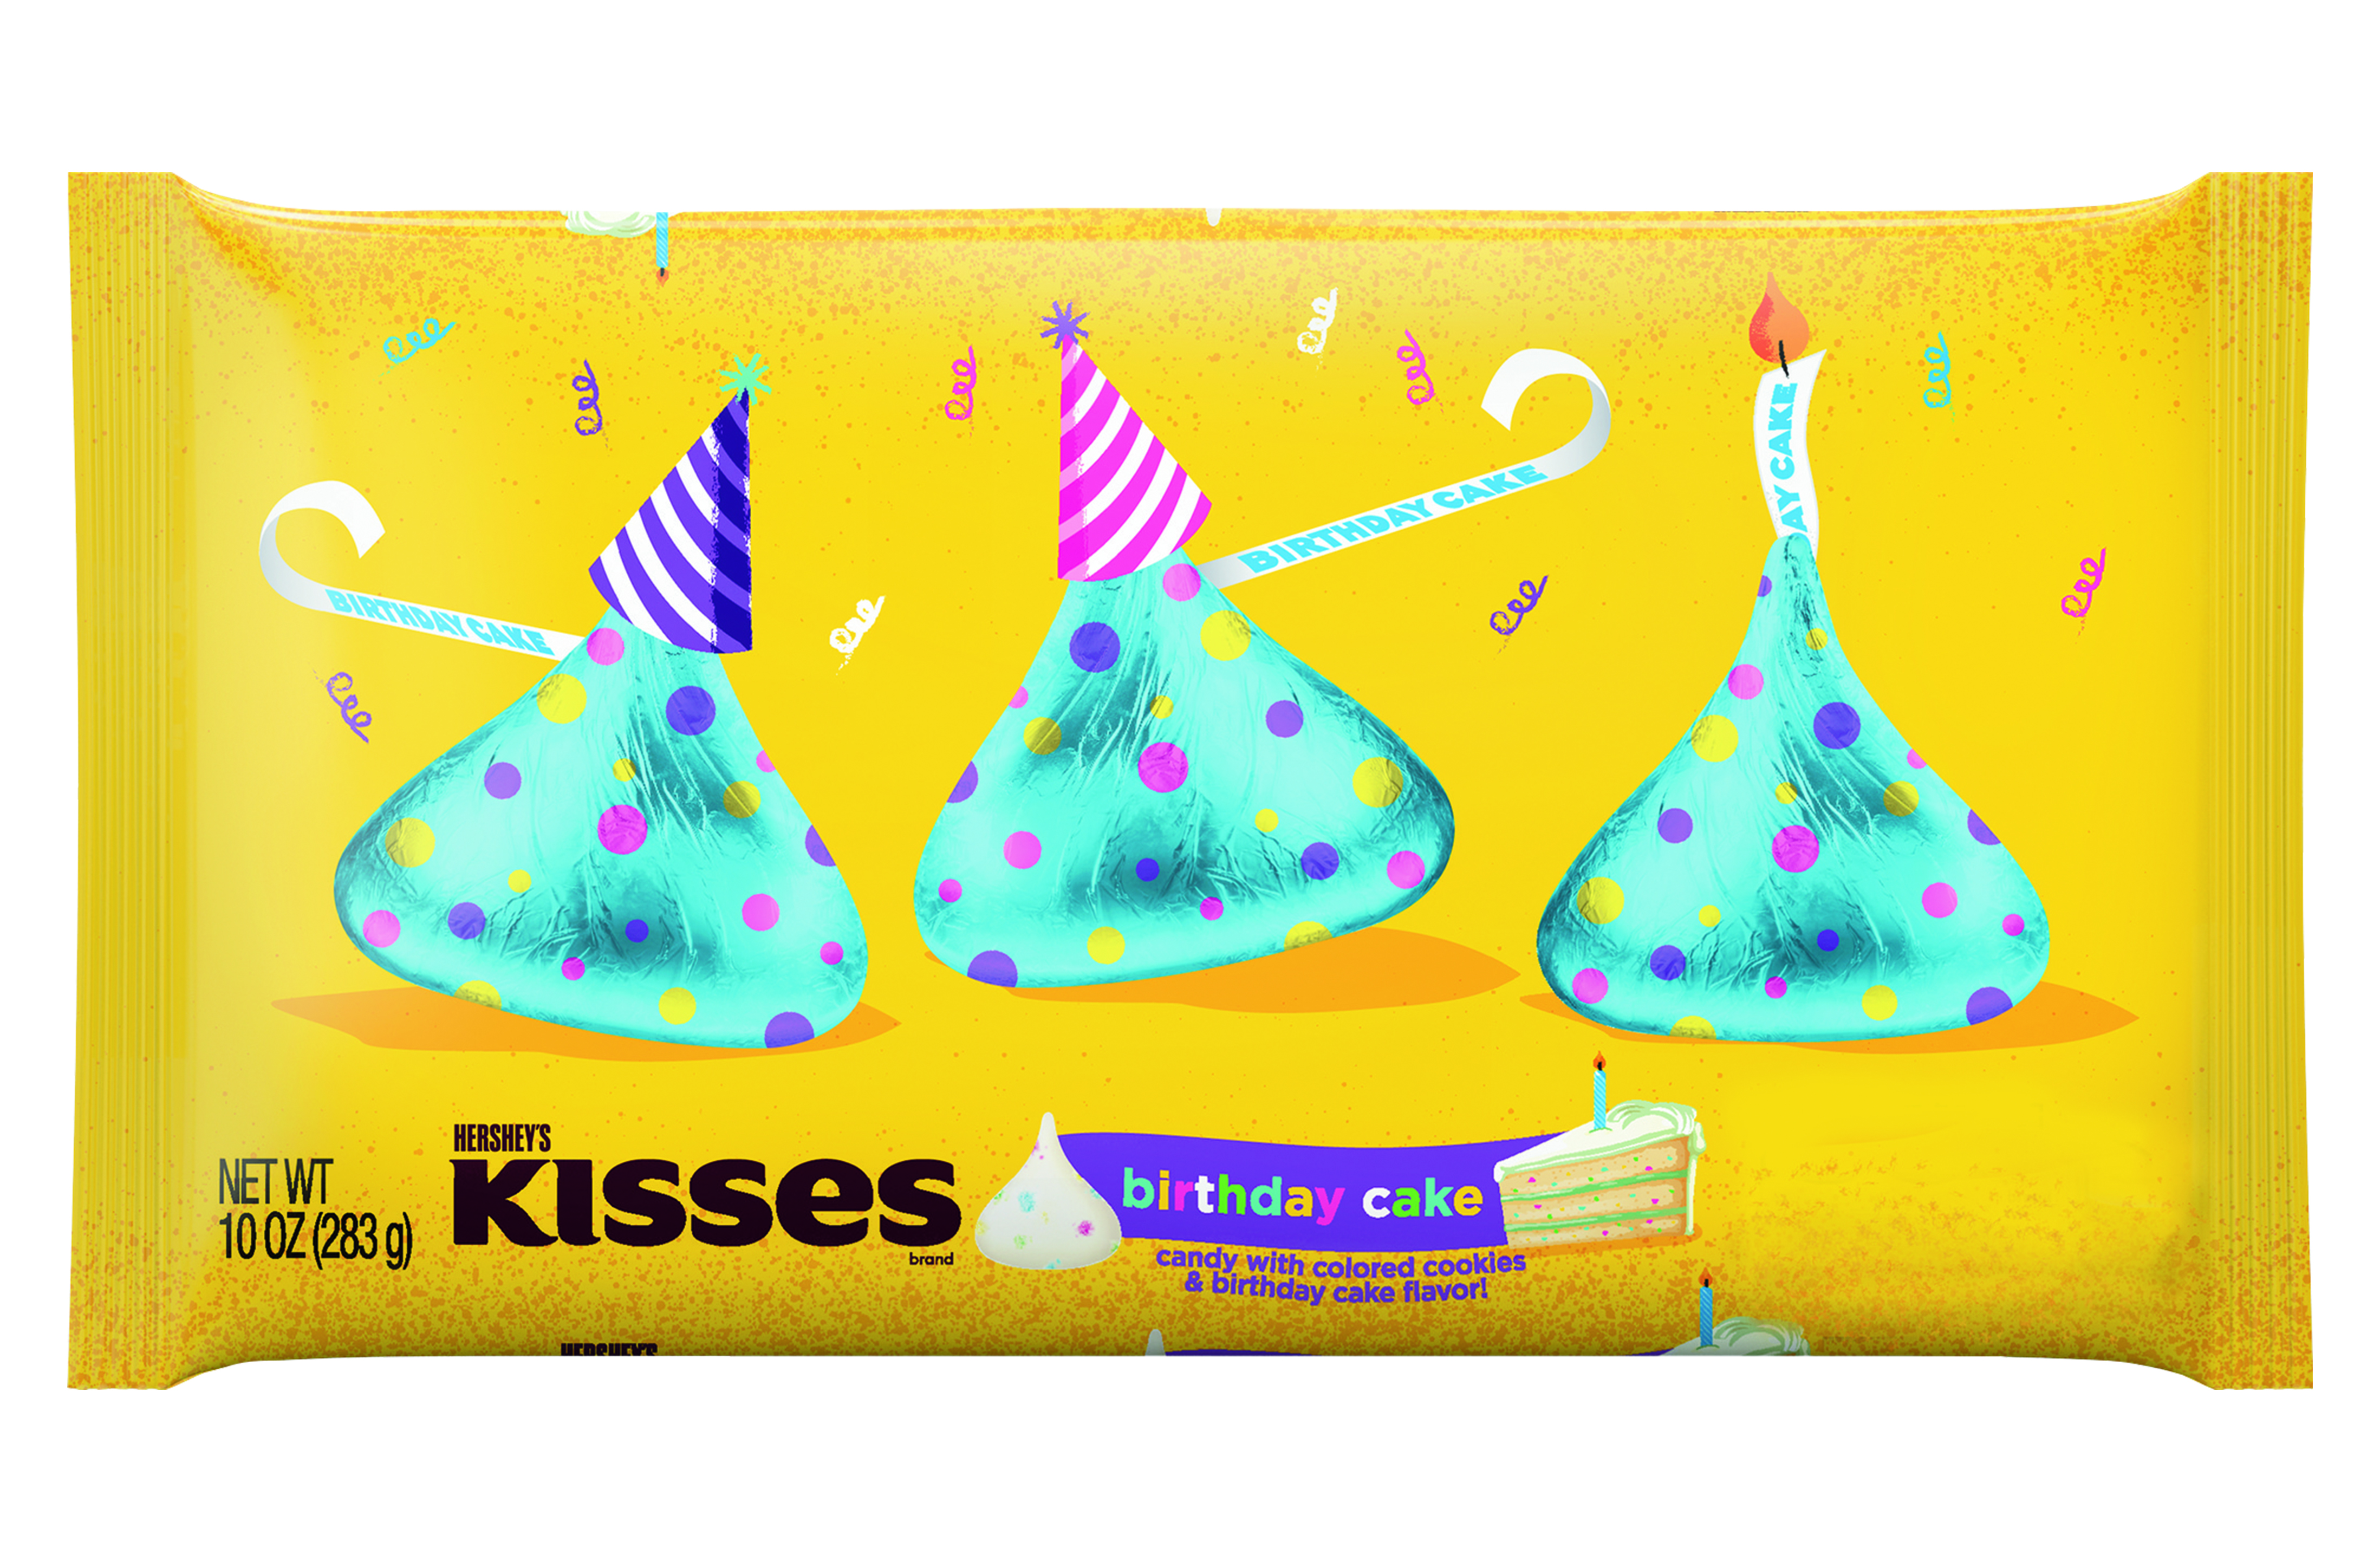 Hersheys HUGS and KISSES Chocolate Cake Recipe